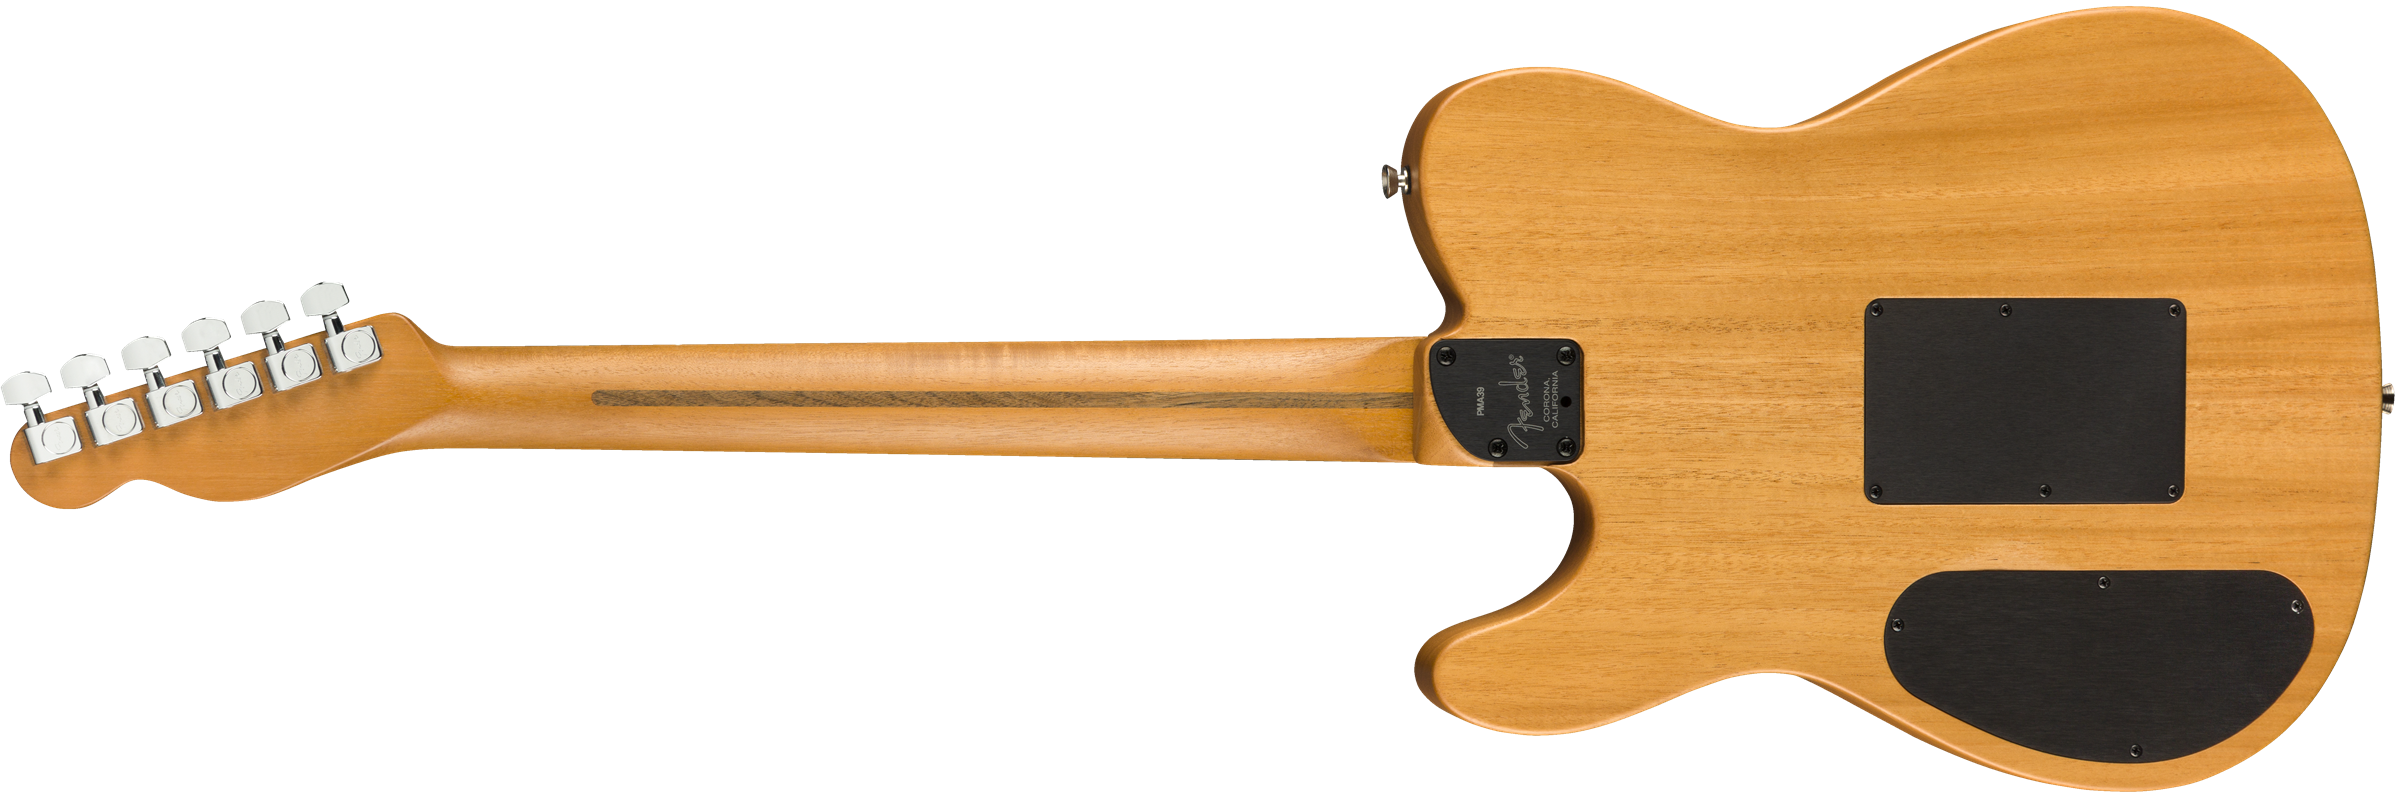 Fender Tele American Acoustasonic Usa Eb - Black - Elektroakustische Gitarre - Variation 1